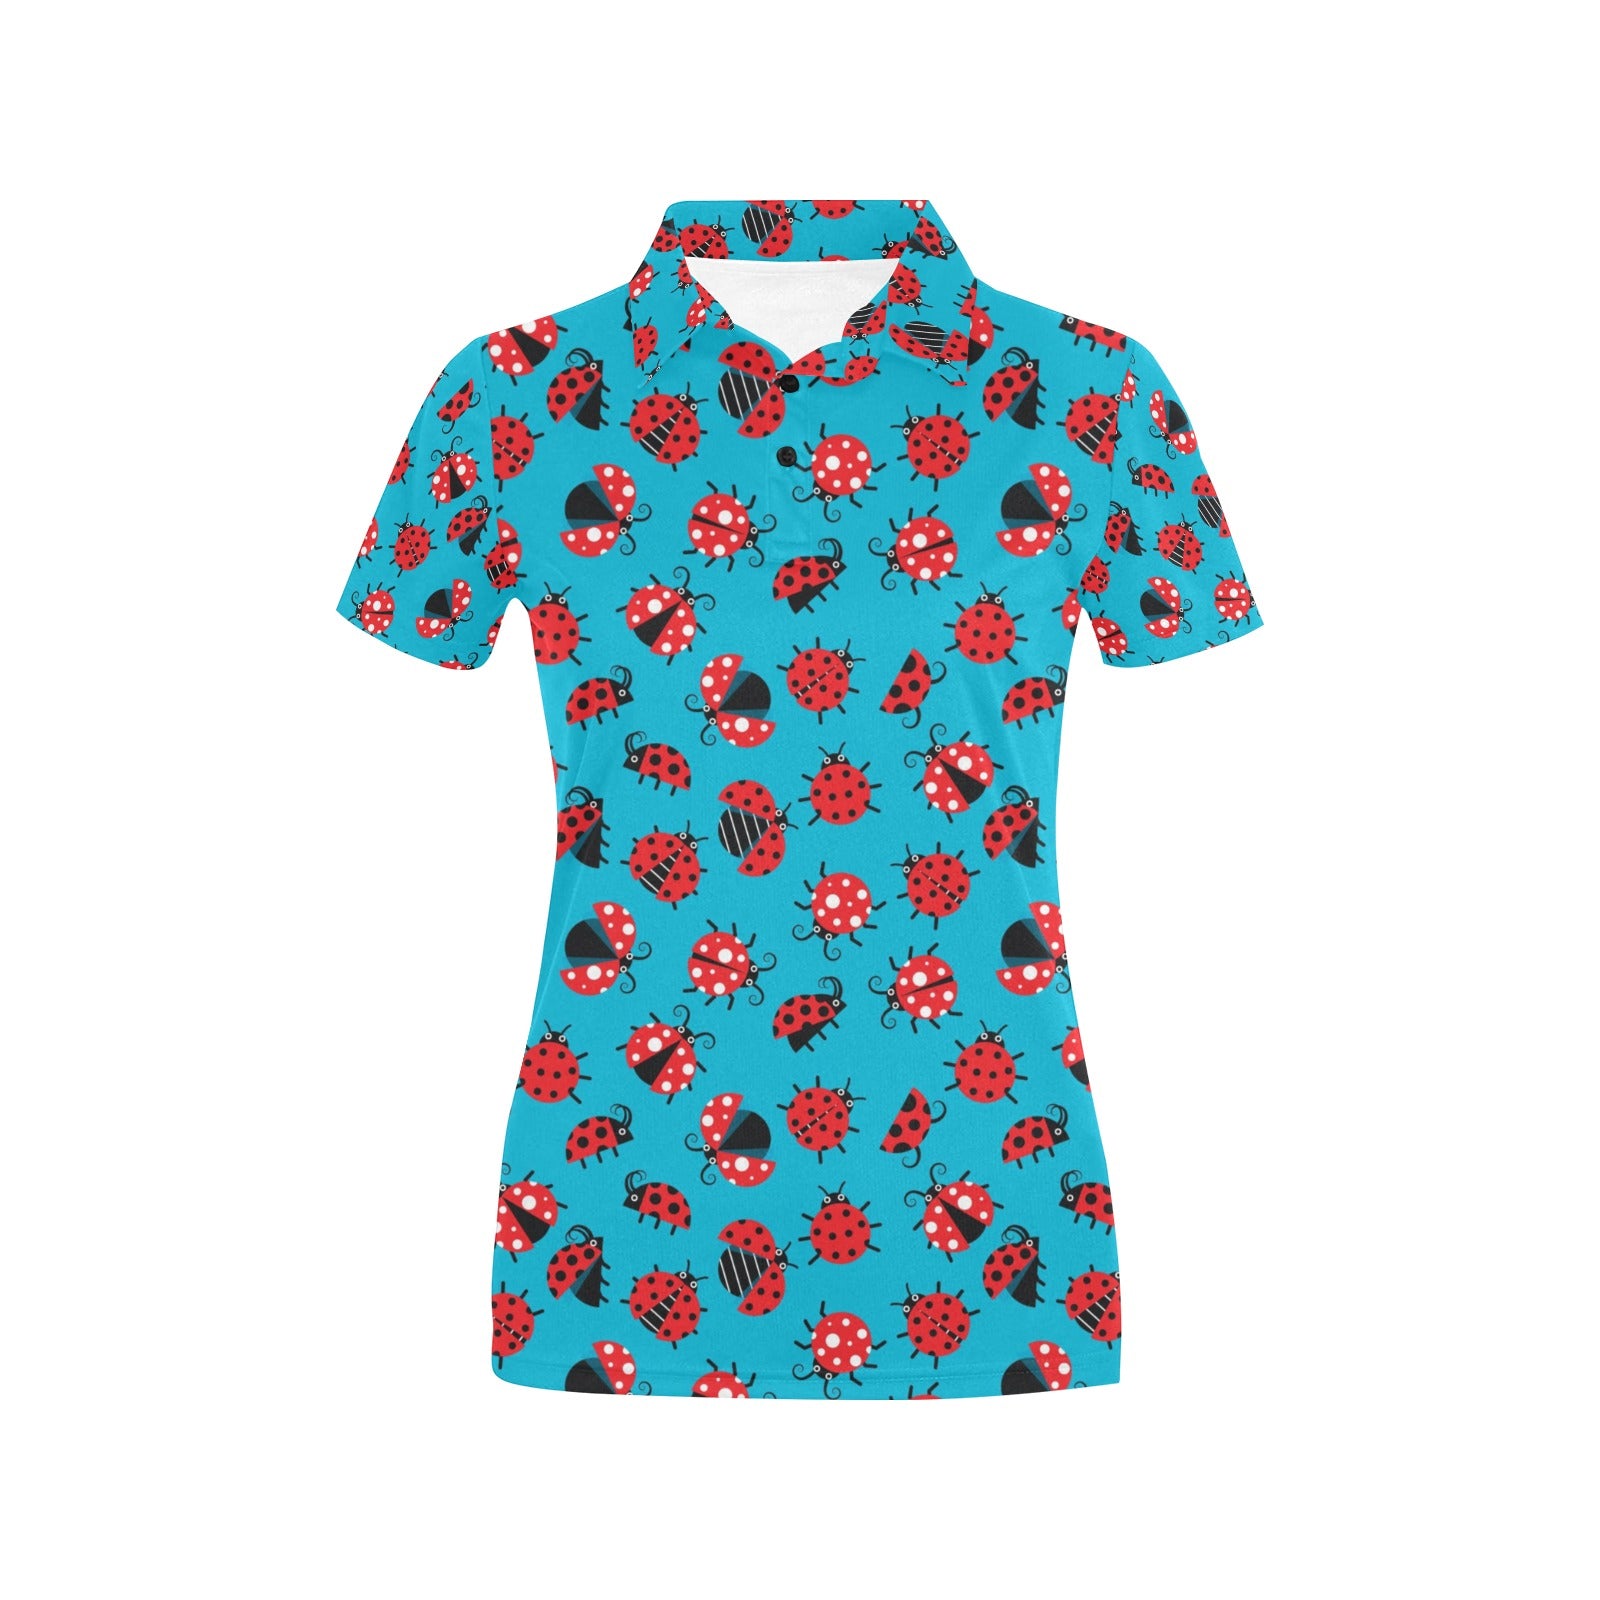 Ladybug Action Print Pattern Women's Polo Shirt